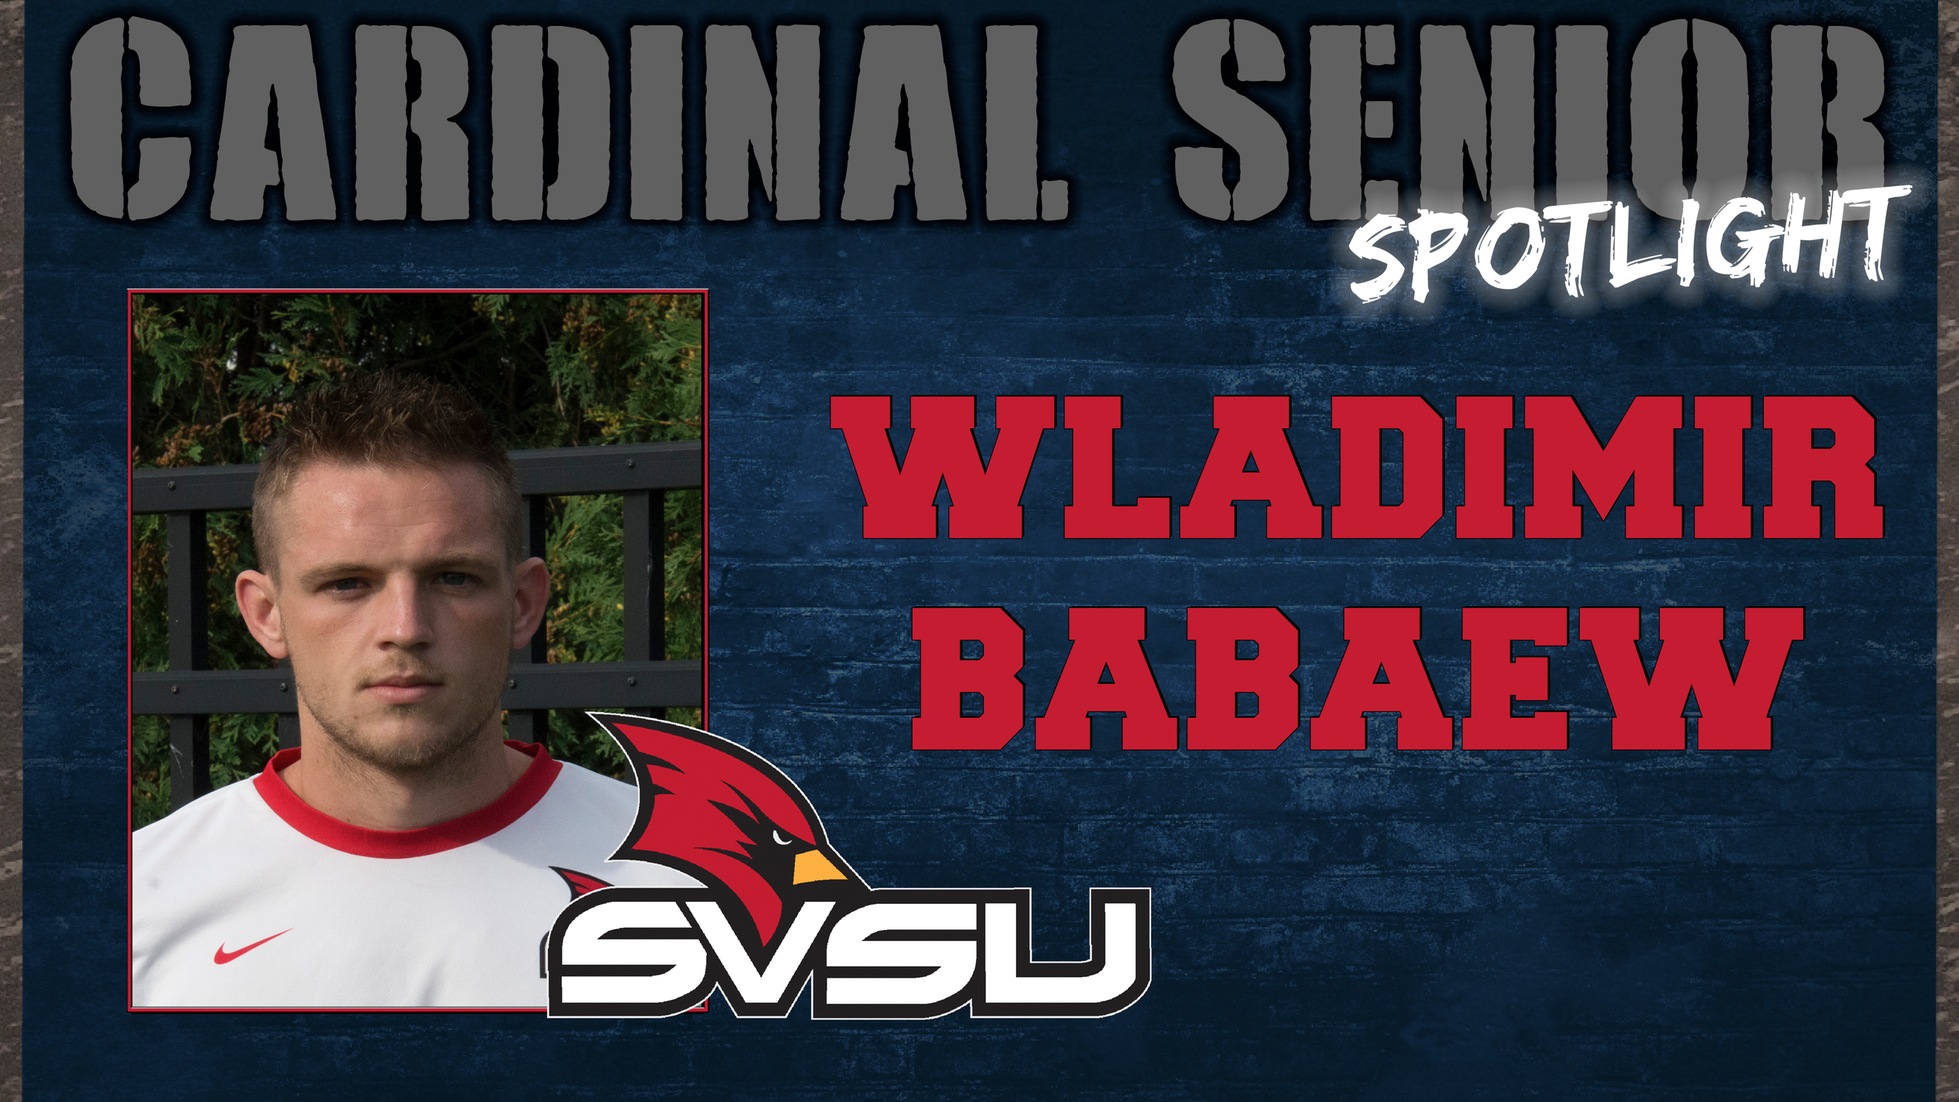 SVSU Cardinal Senior Spotlight - Wladimir Babaew